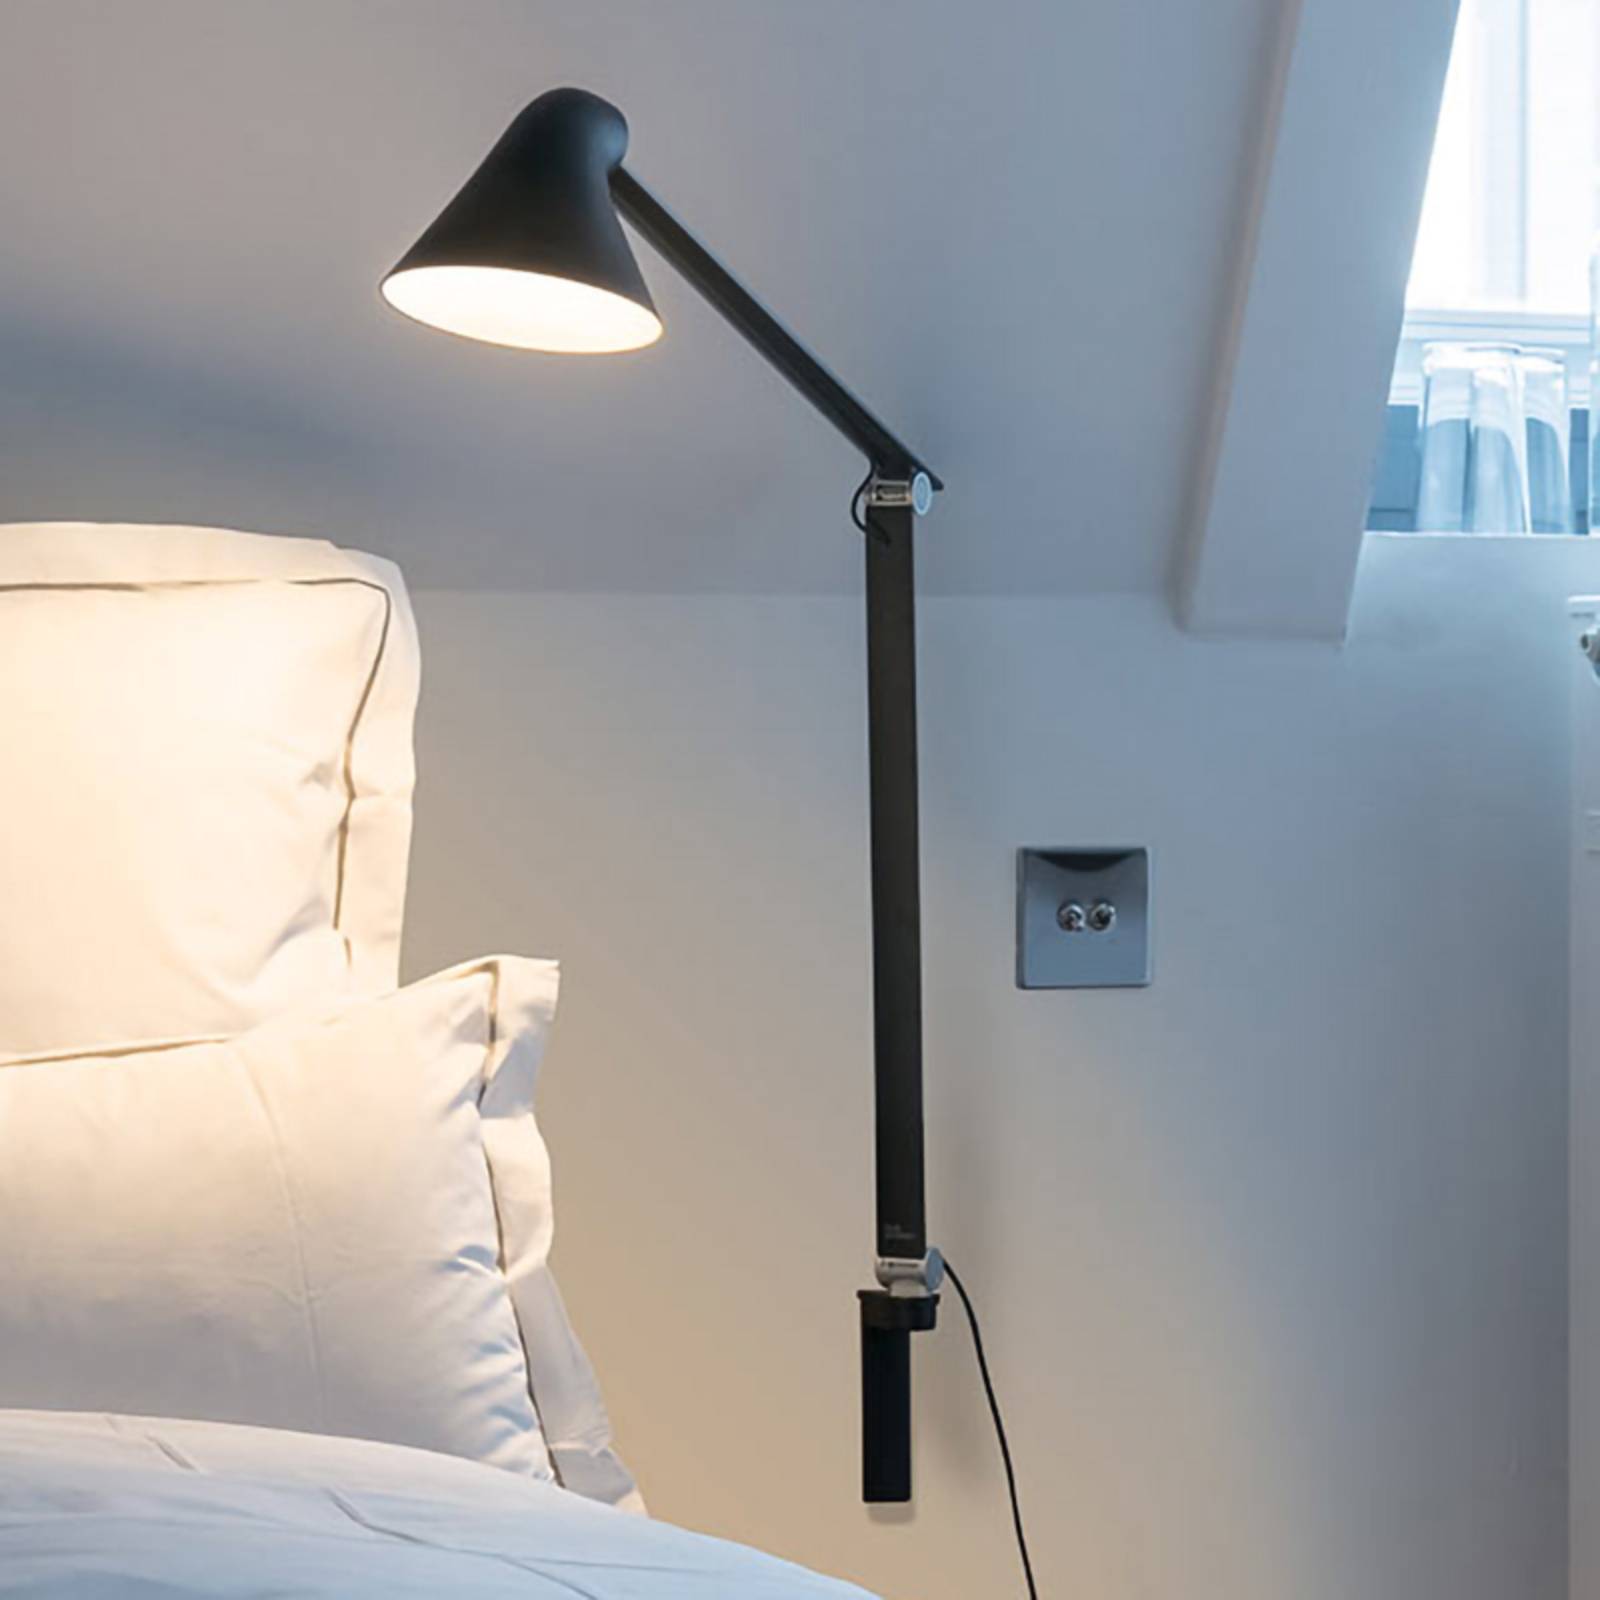 Louis Poulsen NJP LED-Wandlampe, Arm lang, weiß günstig online kaufen